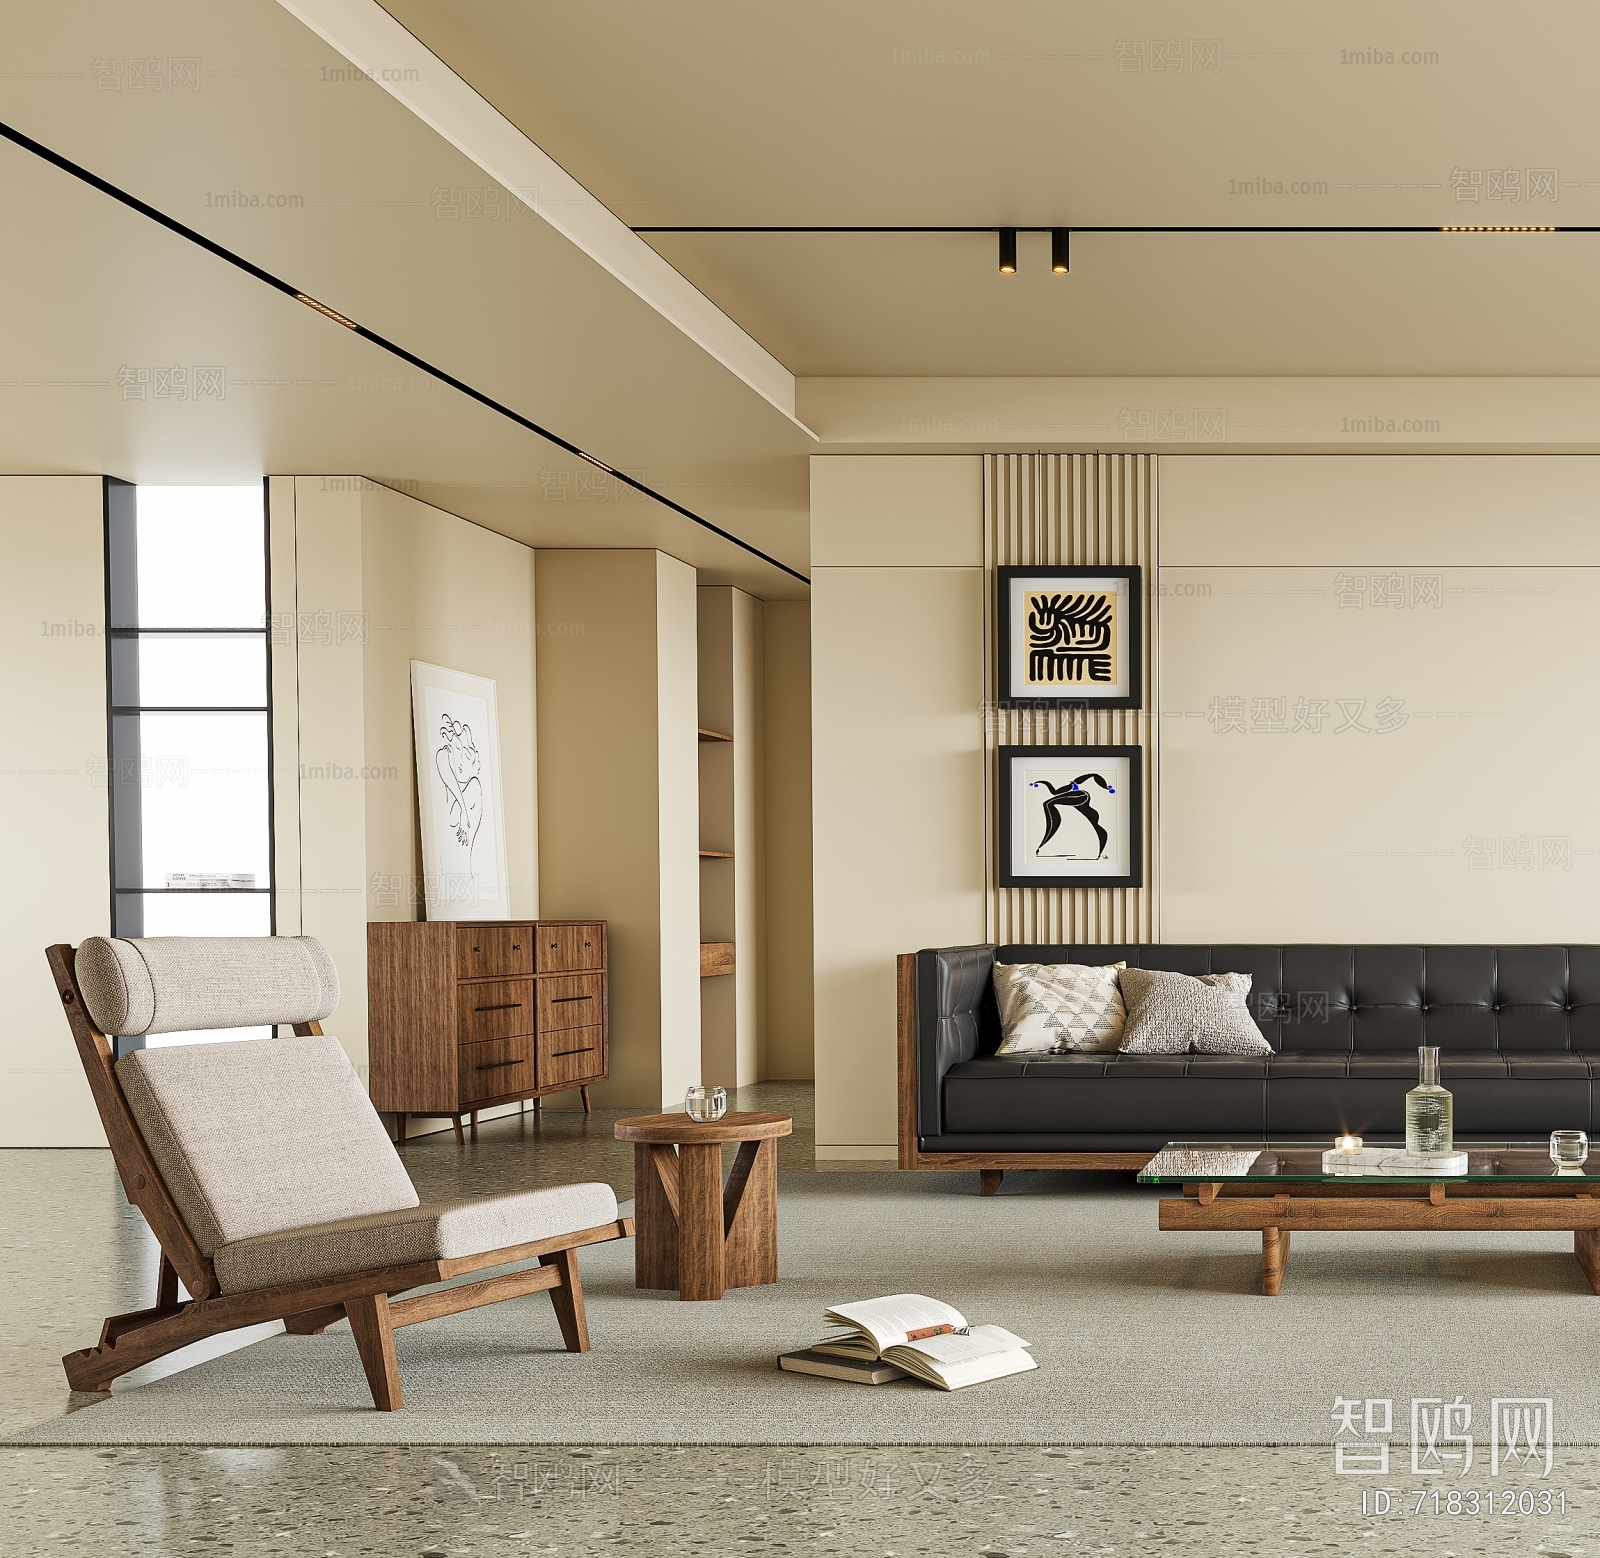 Retro Style A Living Room